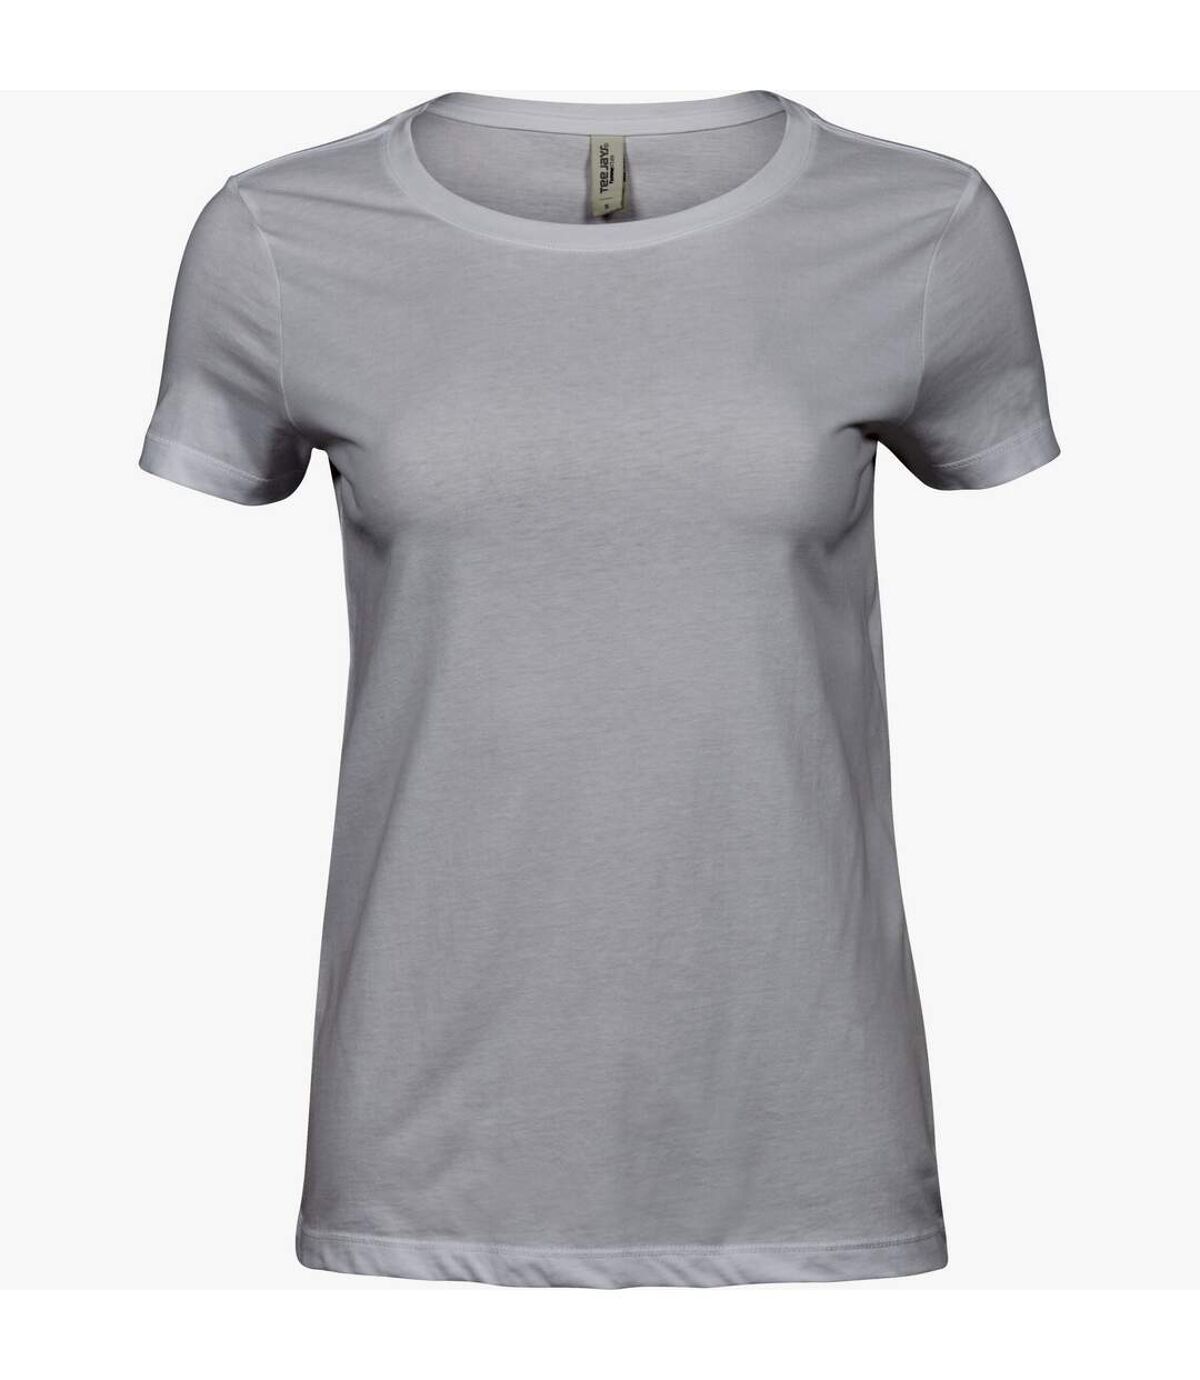 Tee Jays Womens/Ladies Luxury Cotton T-Shirt (White)